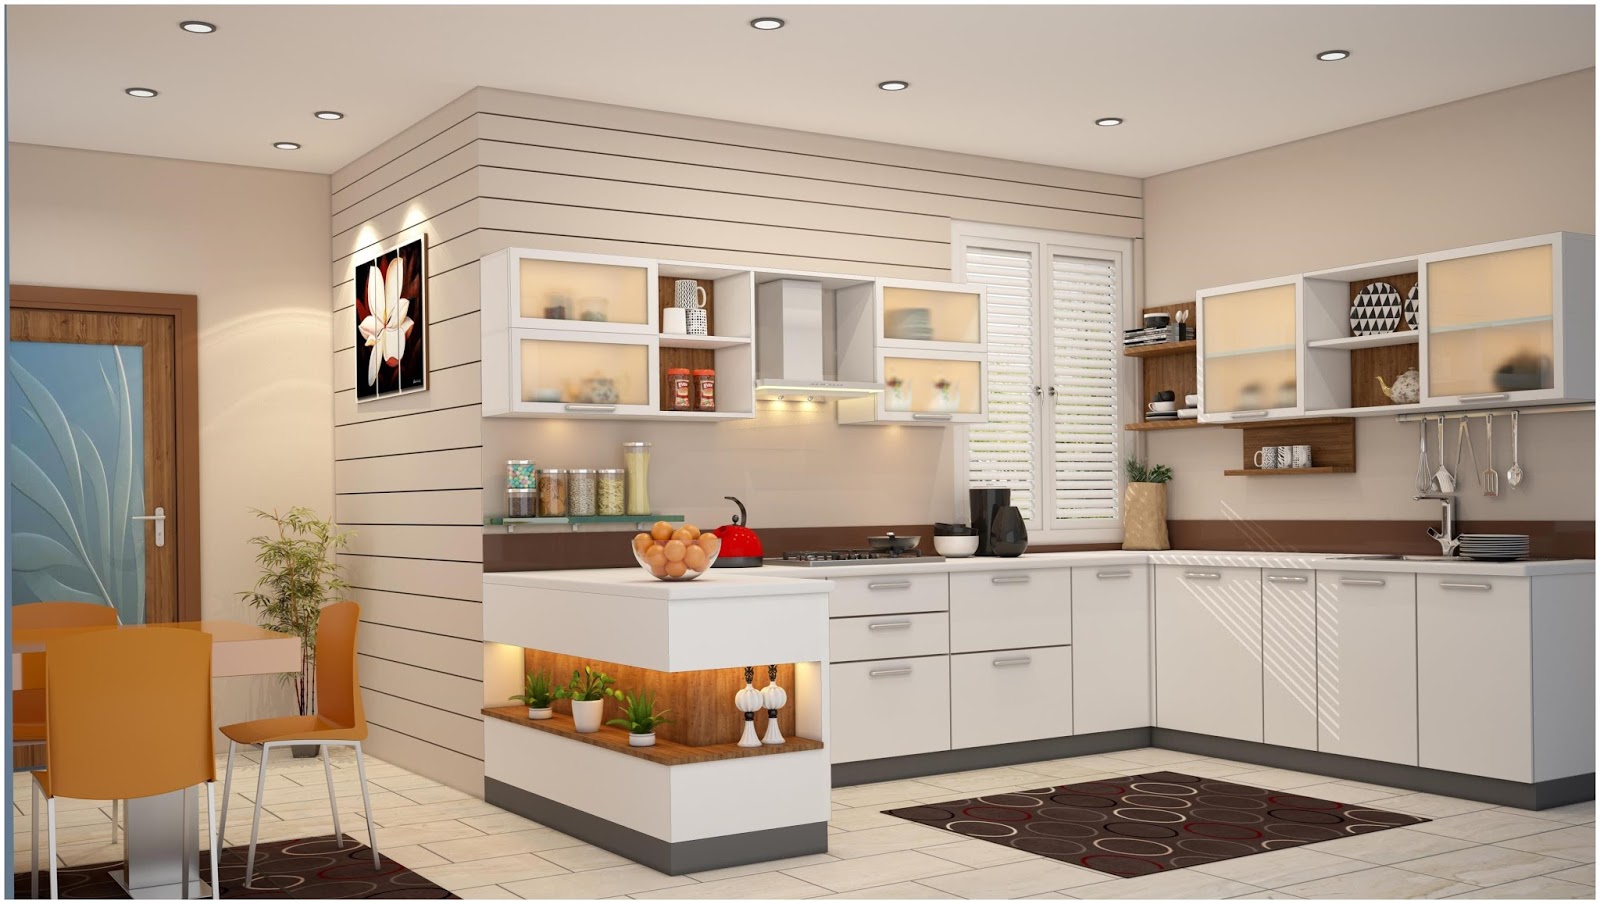 16 New Design Of Modular Kitchen New Age Shiny Ushaped Modular Kitchen Design for Indian Homes New,Design,Of,Modular,Kitchen